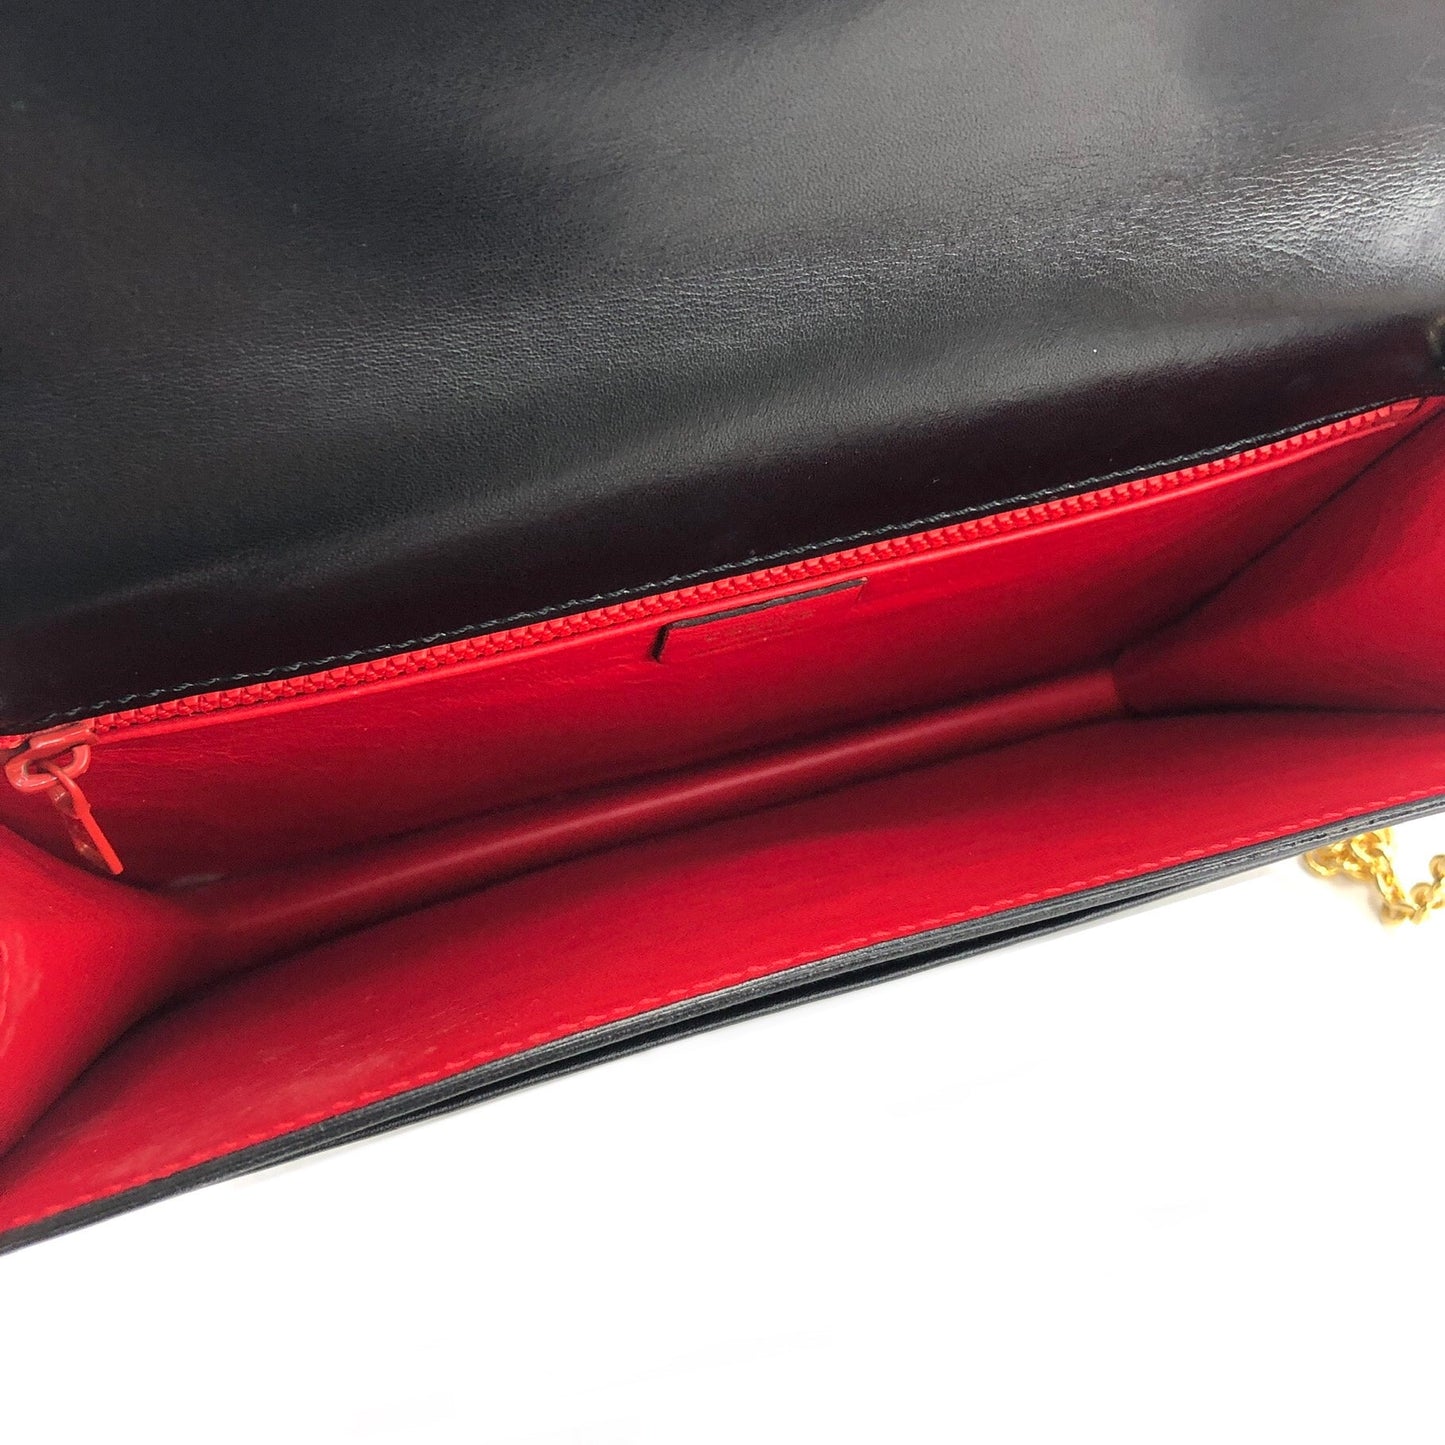 CELINE Starball Leather Chain Shoulderbag mini bag black rb8big